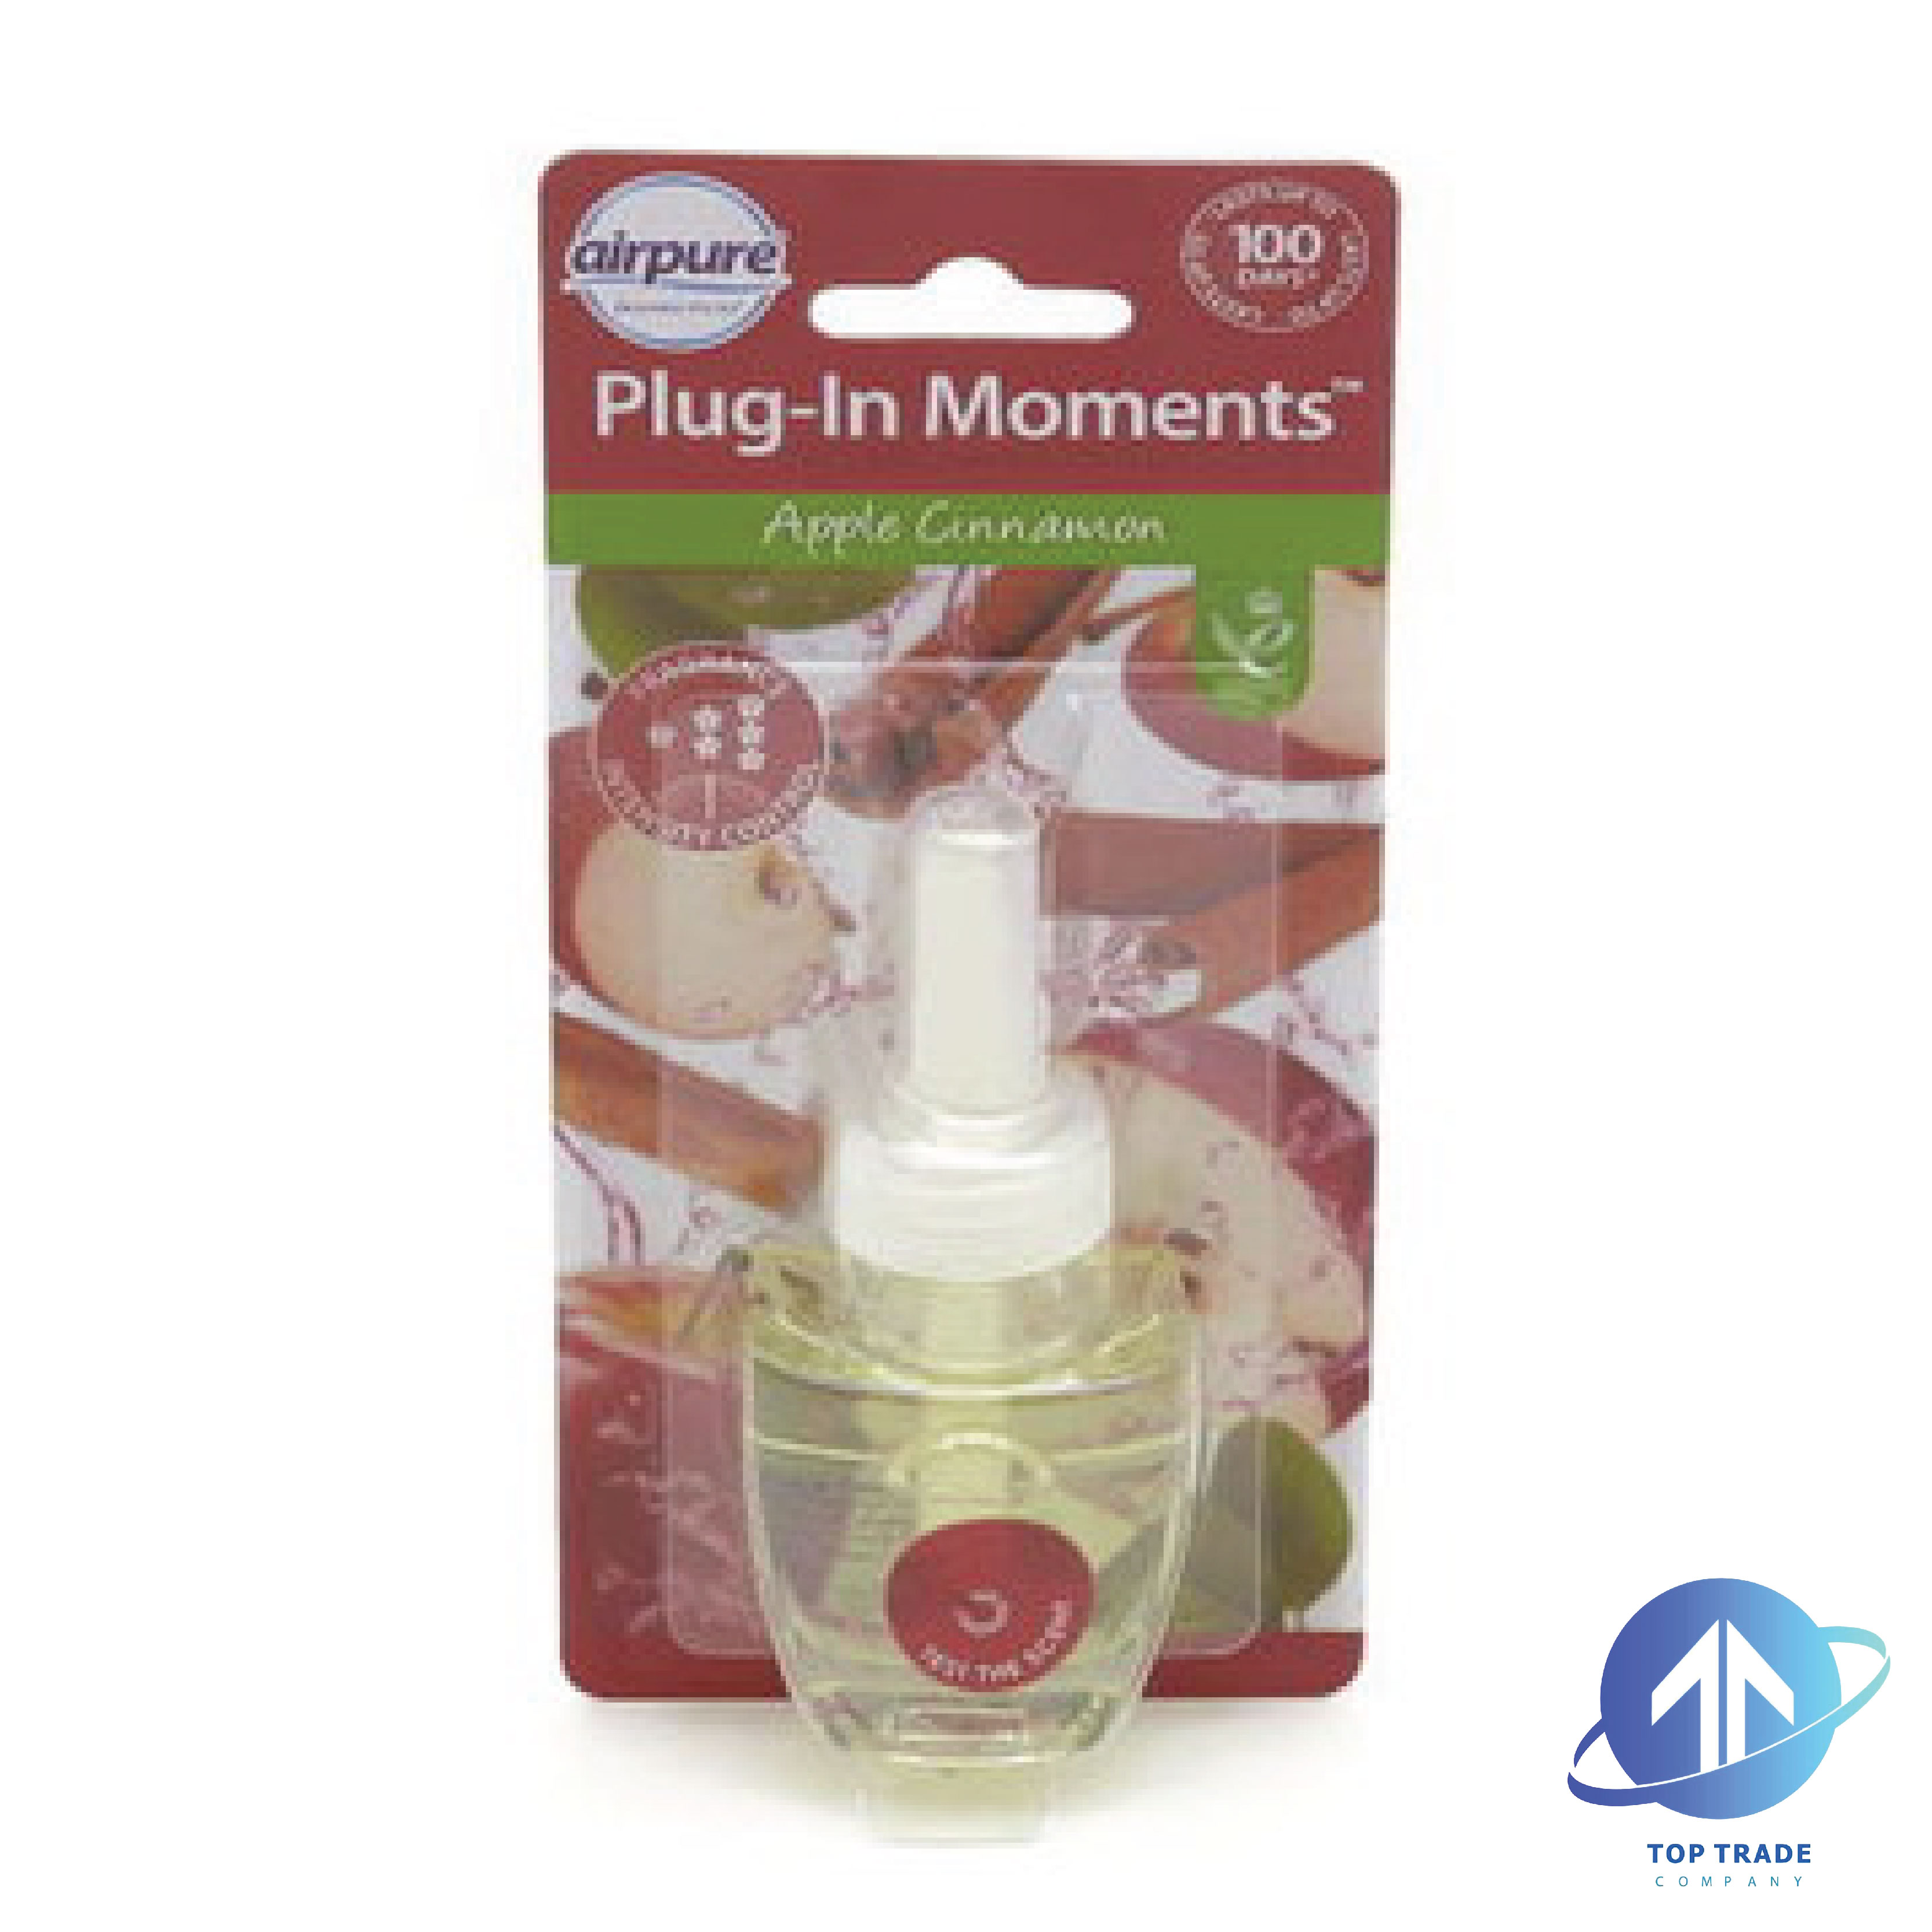 Airpure Plug-In Moments refill apple cinnamon